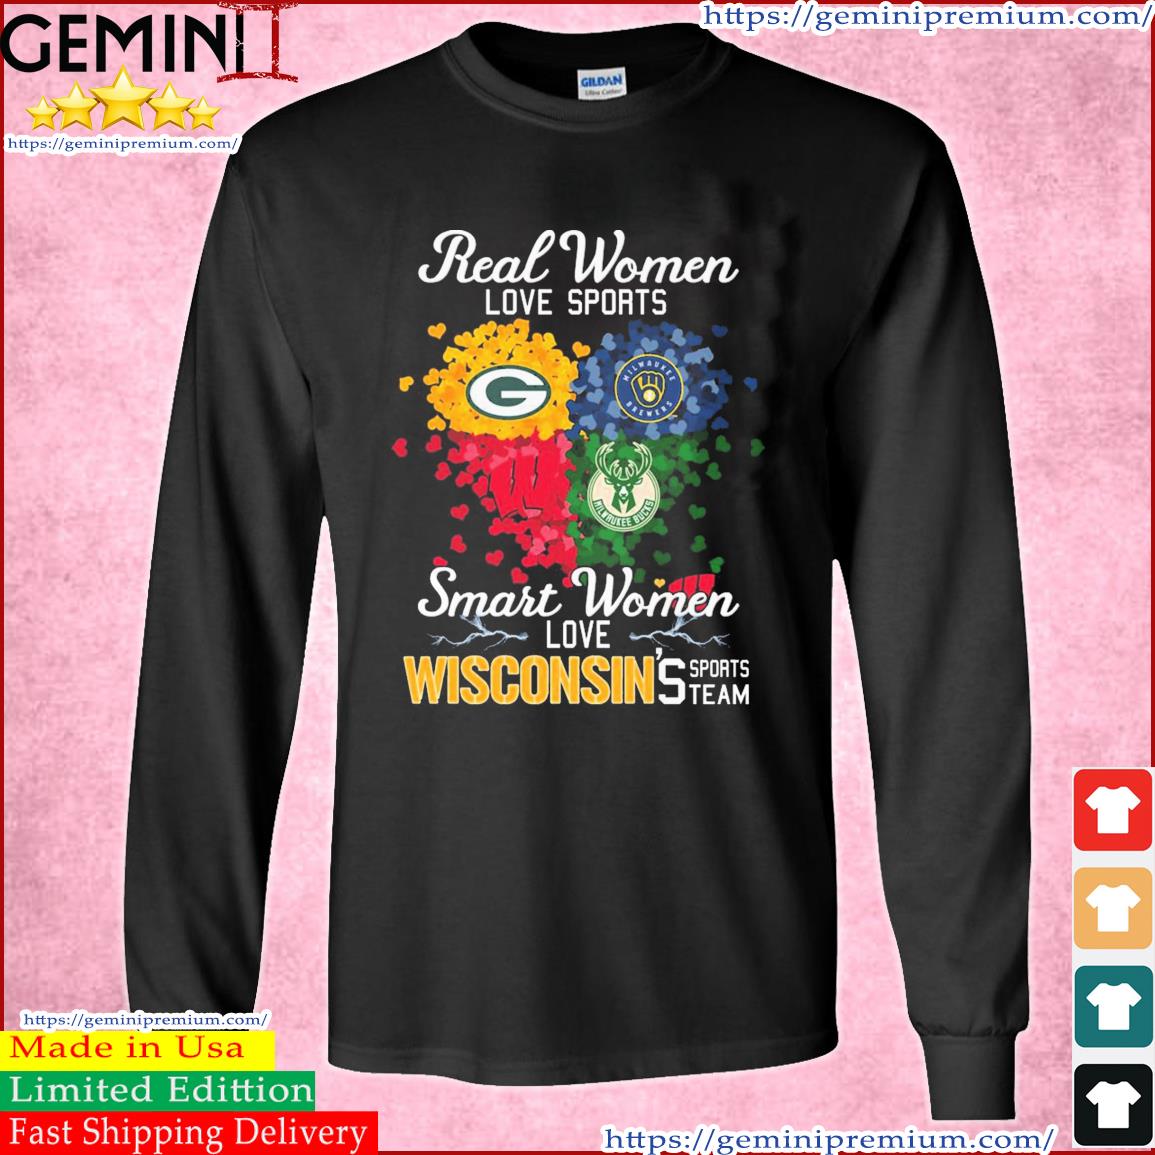 Real Women Love Sports Smart Women Love Wisconsin's Sports Team Shirt Long Sleeve Tee